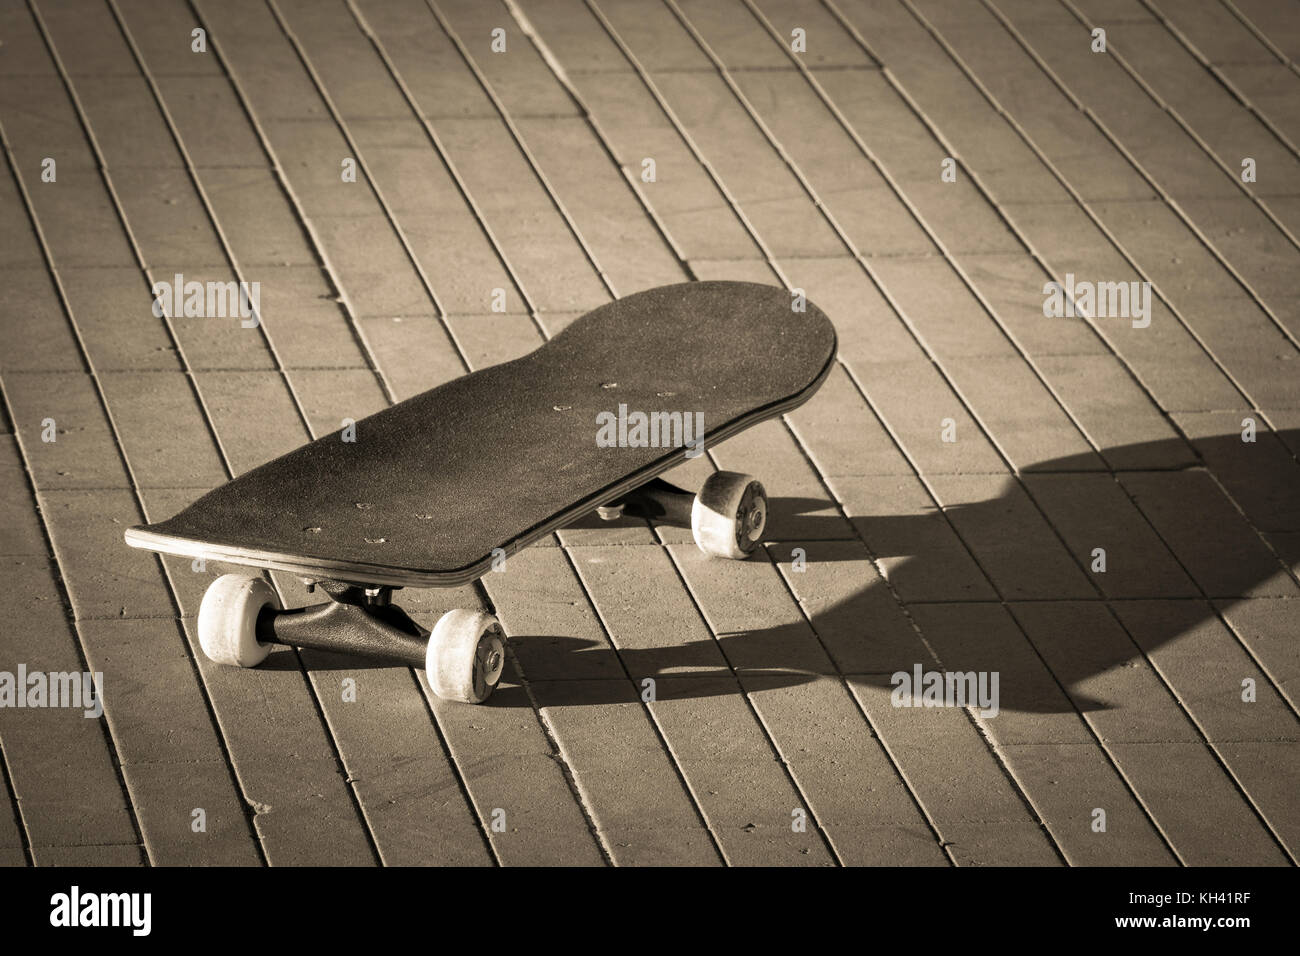 Uno skateboard su strada Foto stock - Alamy